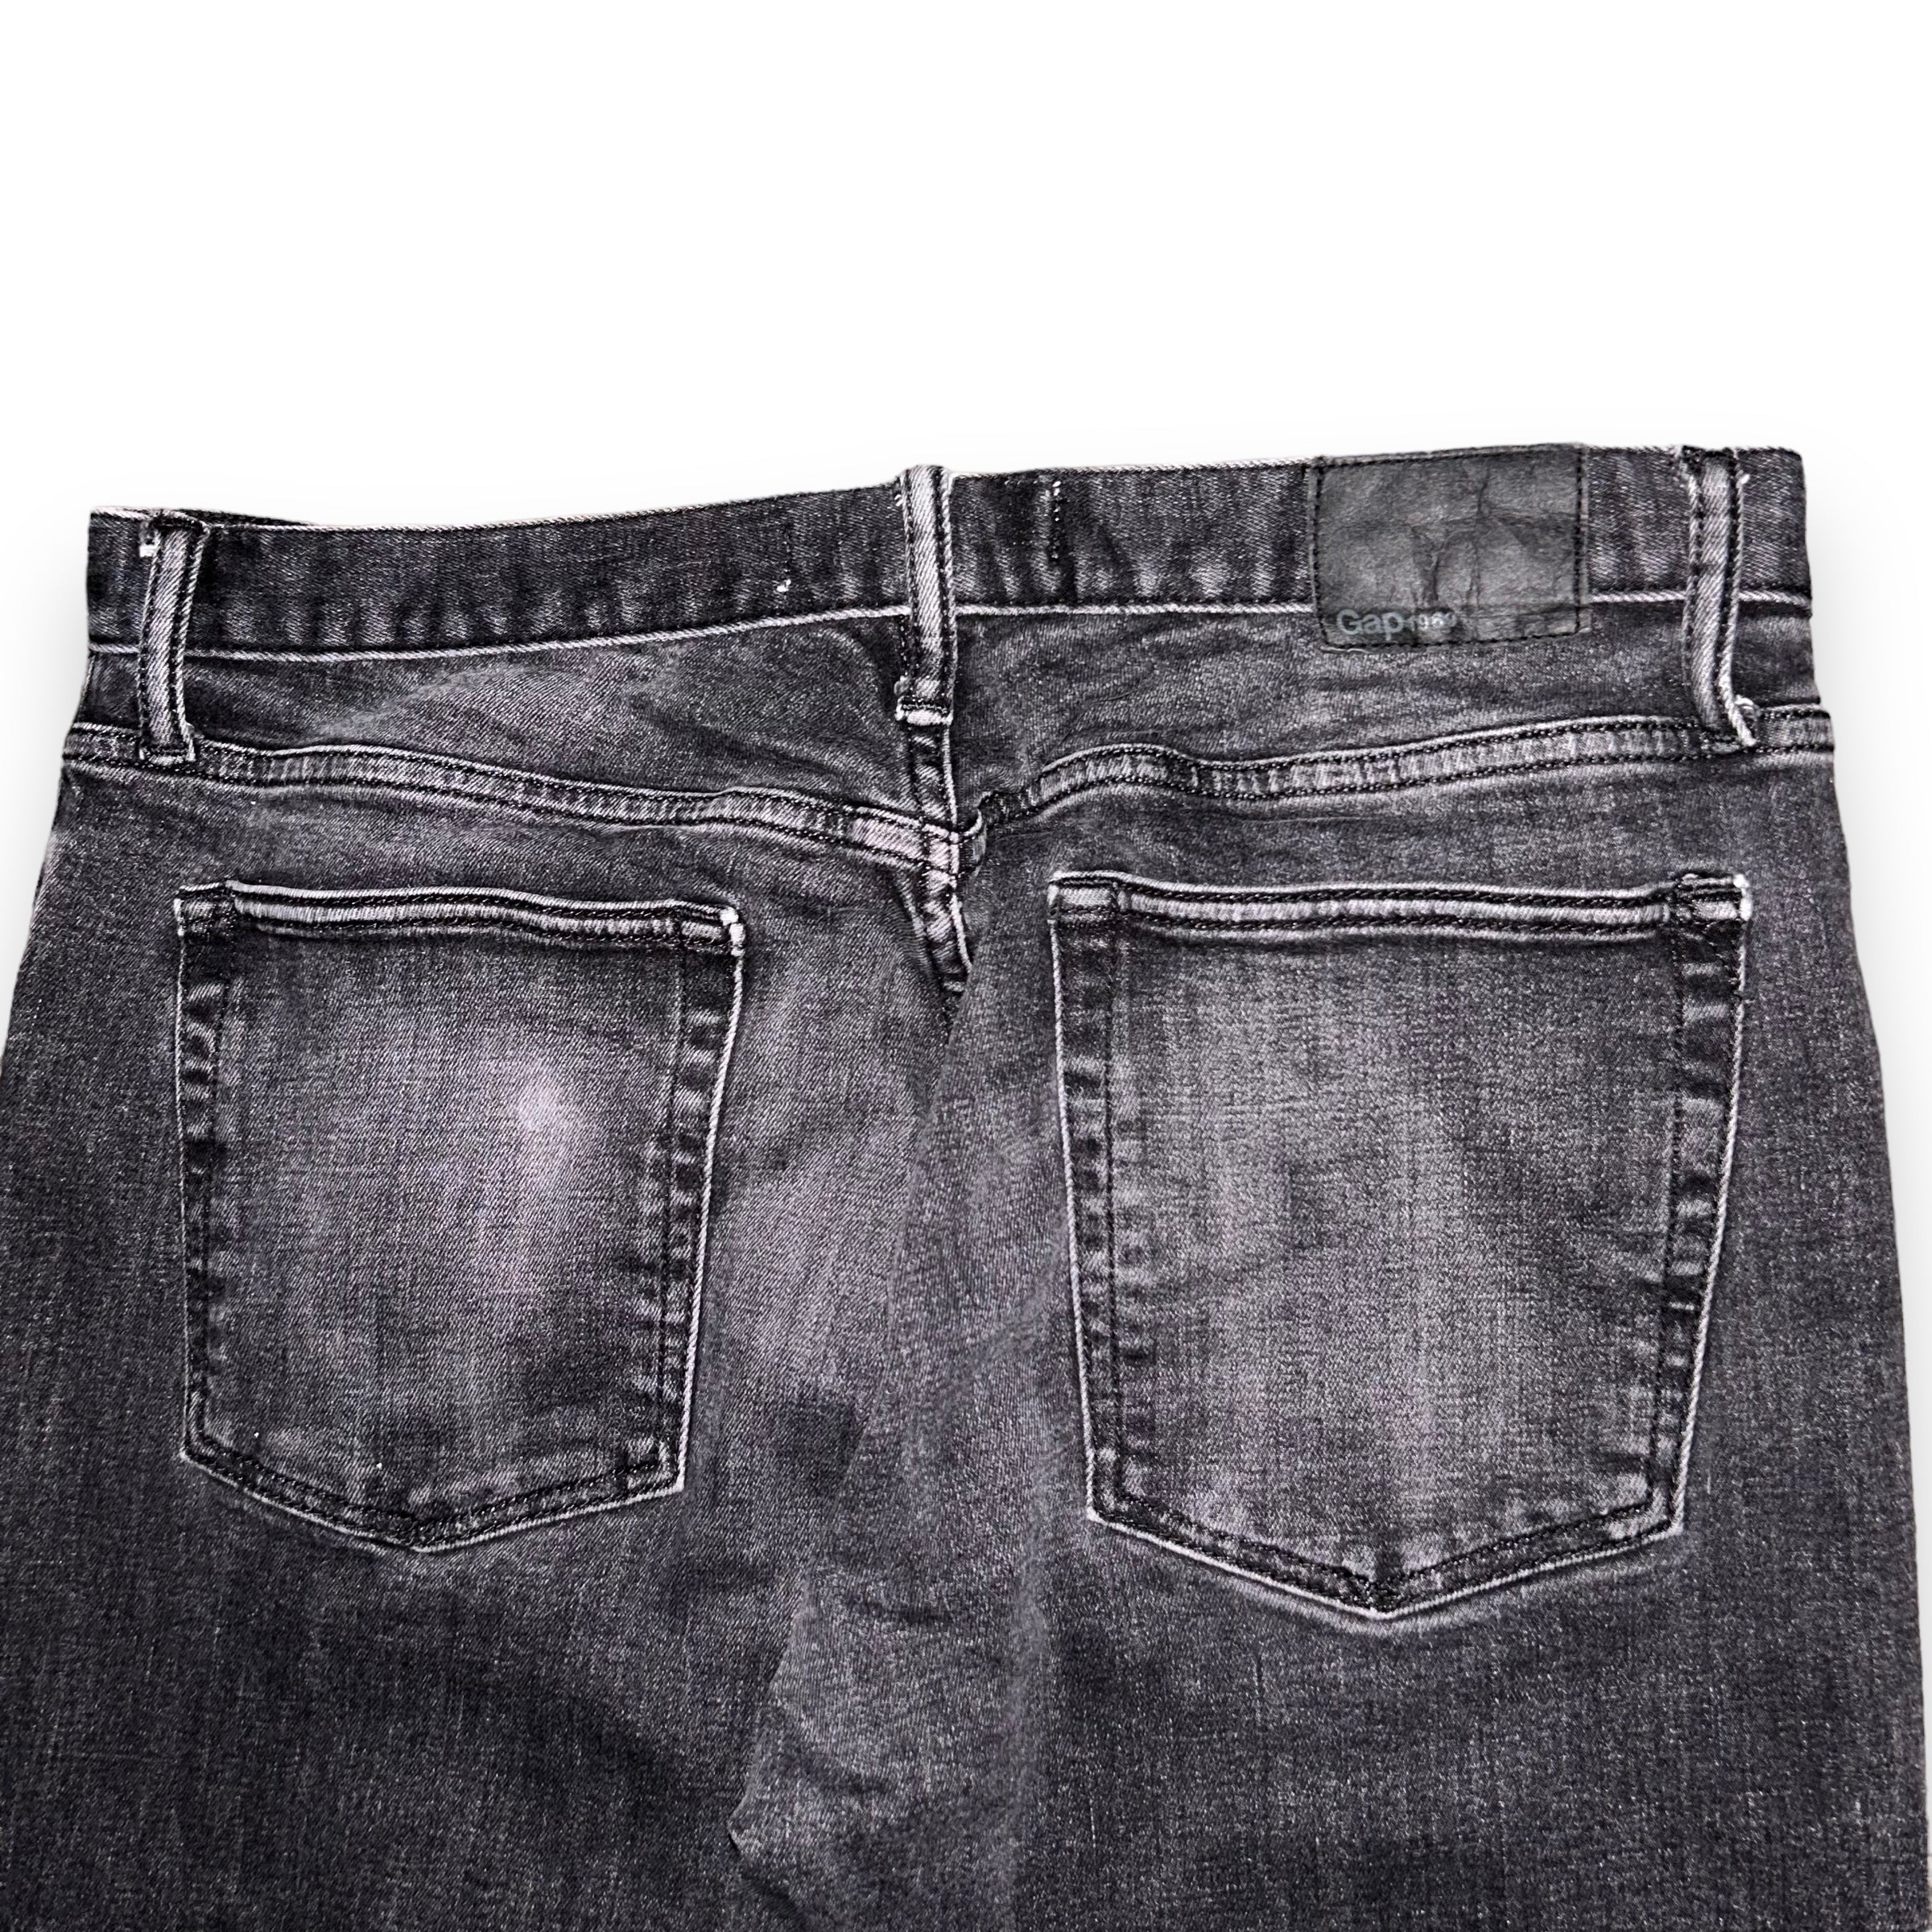 Jeans GAP Vintage  (34 USA  L)